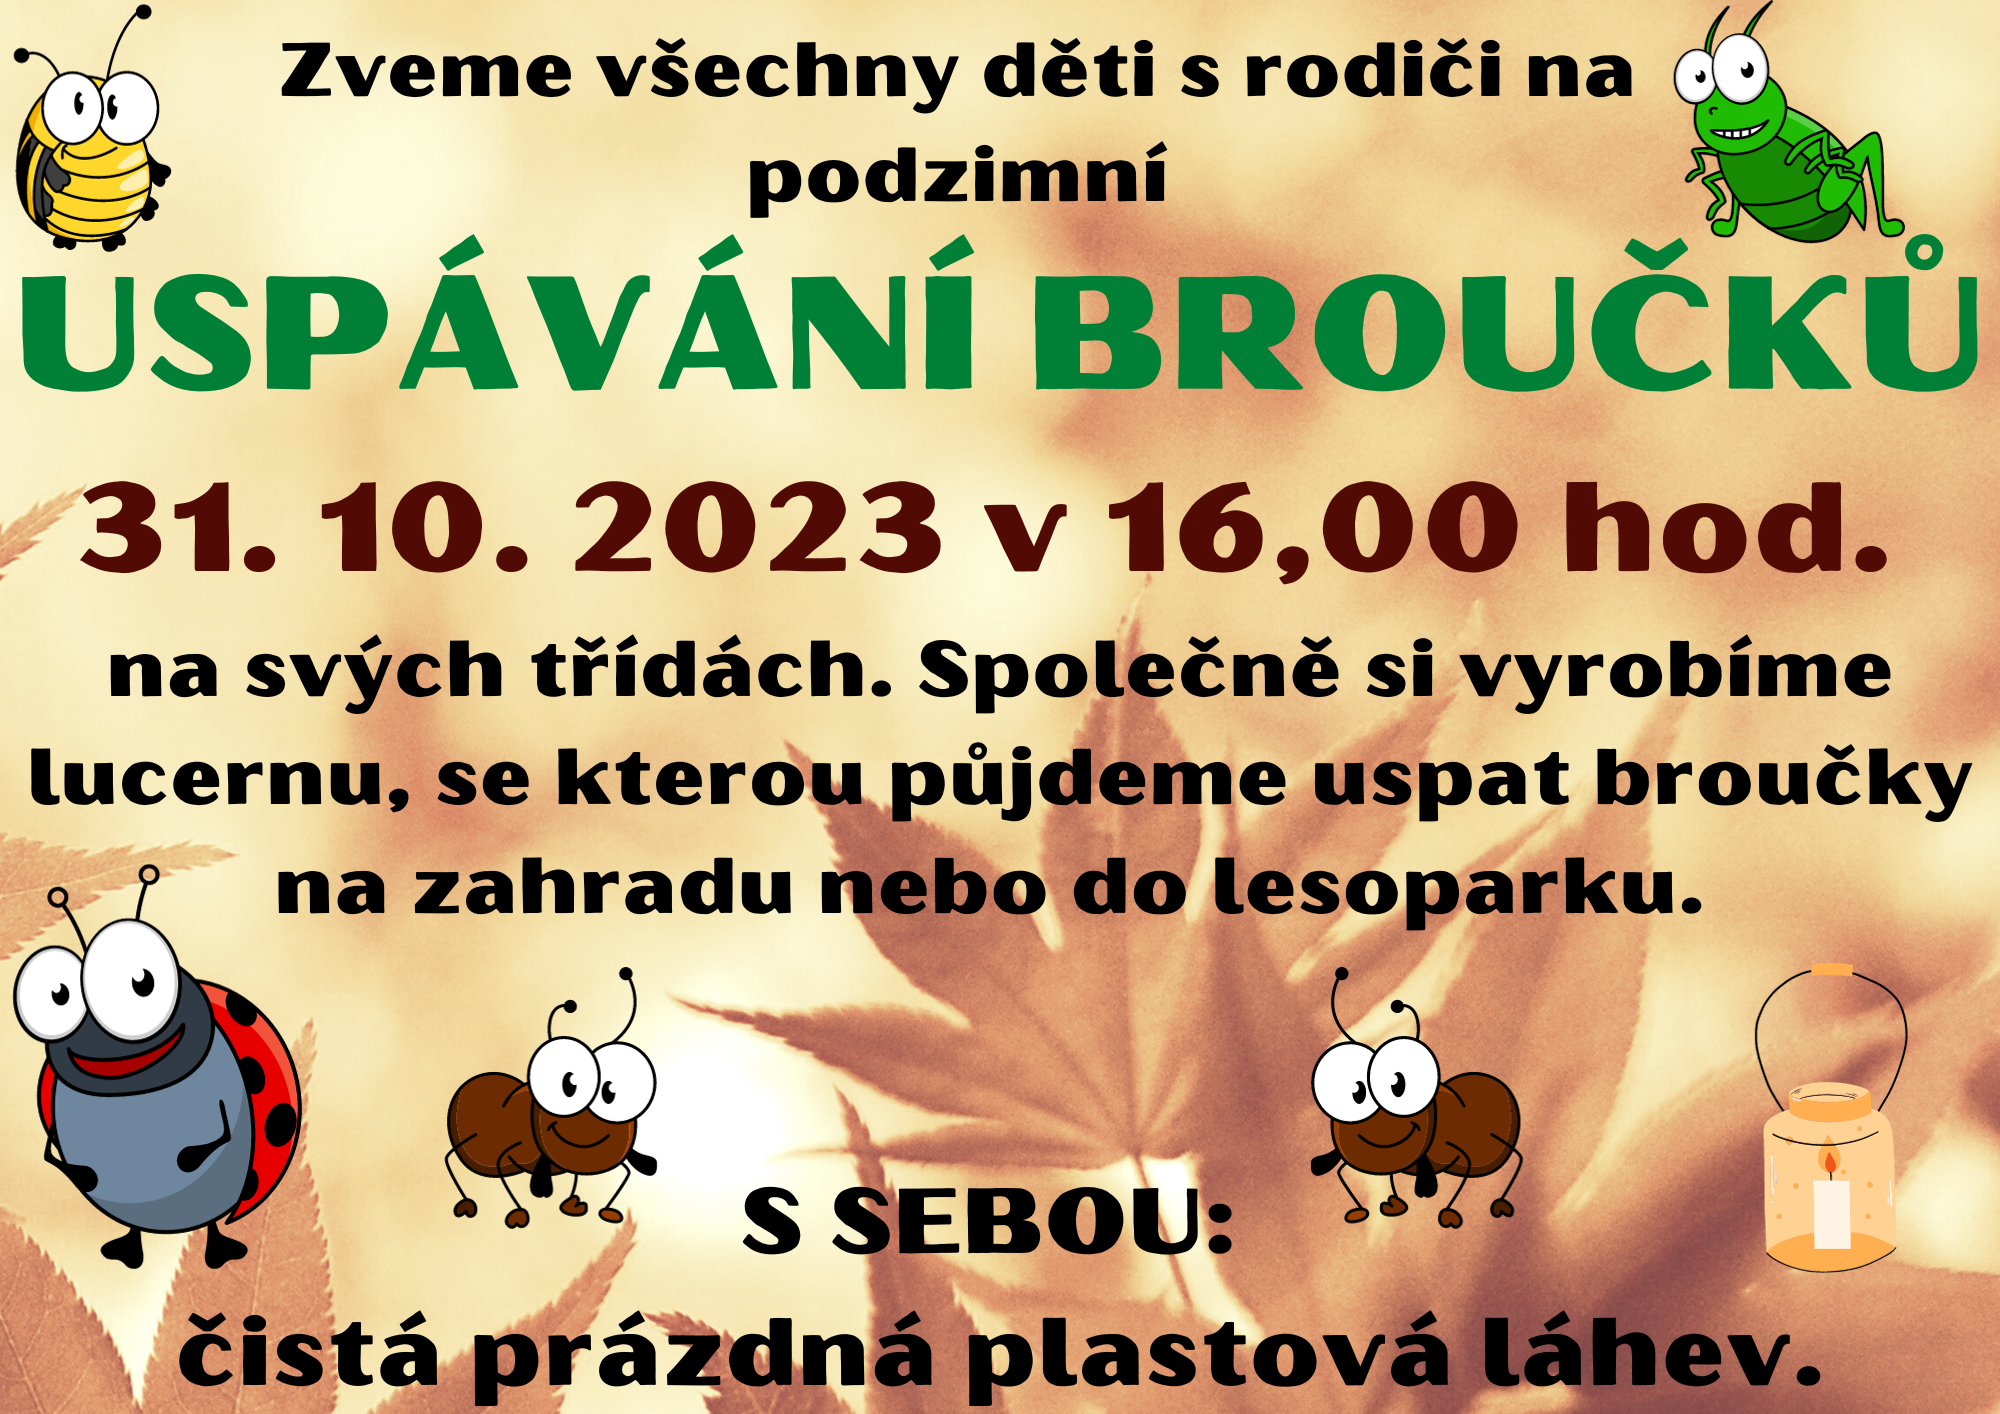 uspavani_broucku_(2).png (2.95 MB)